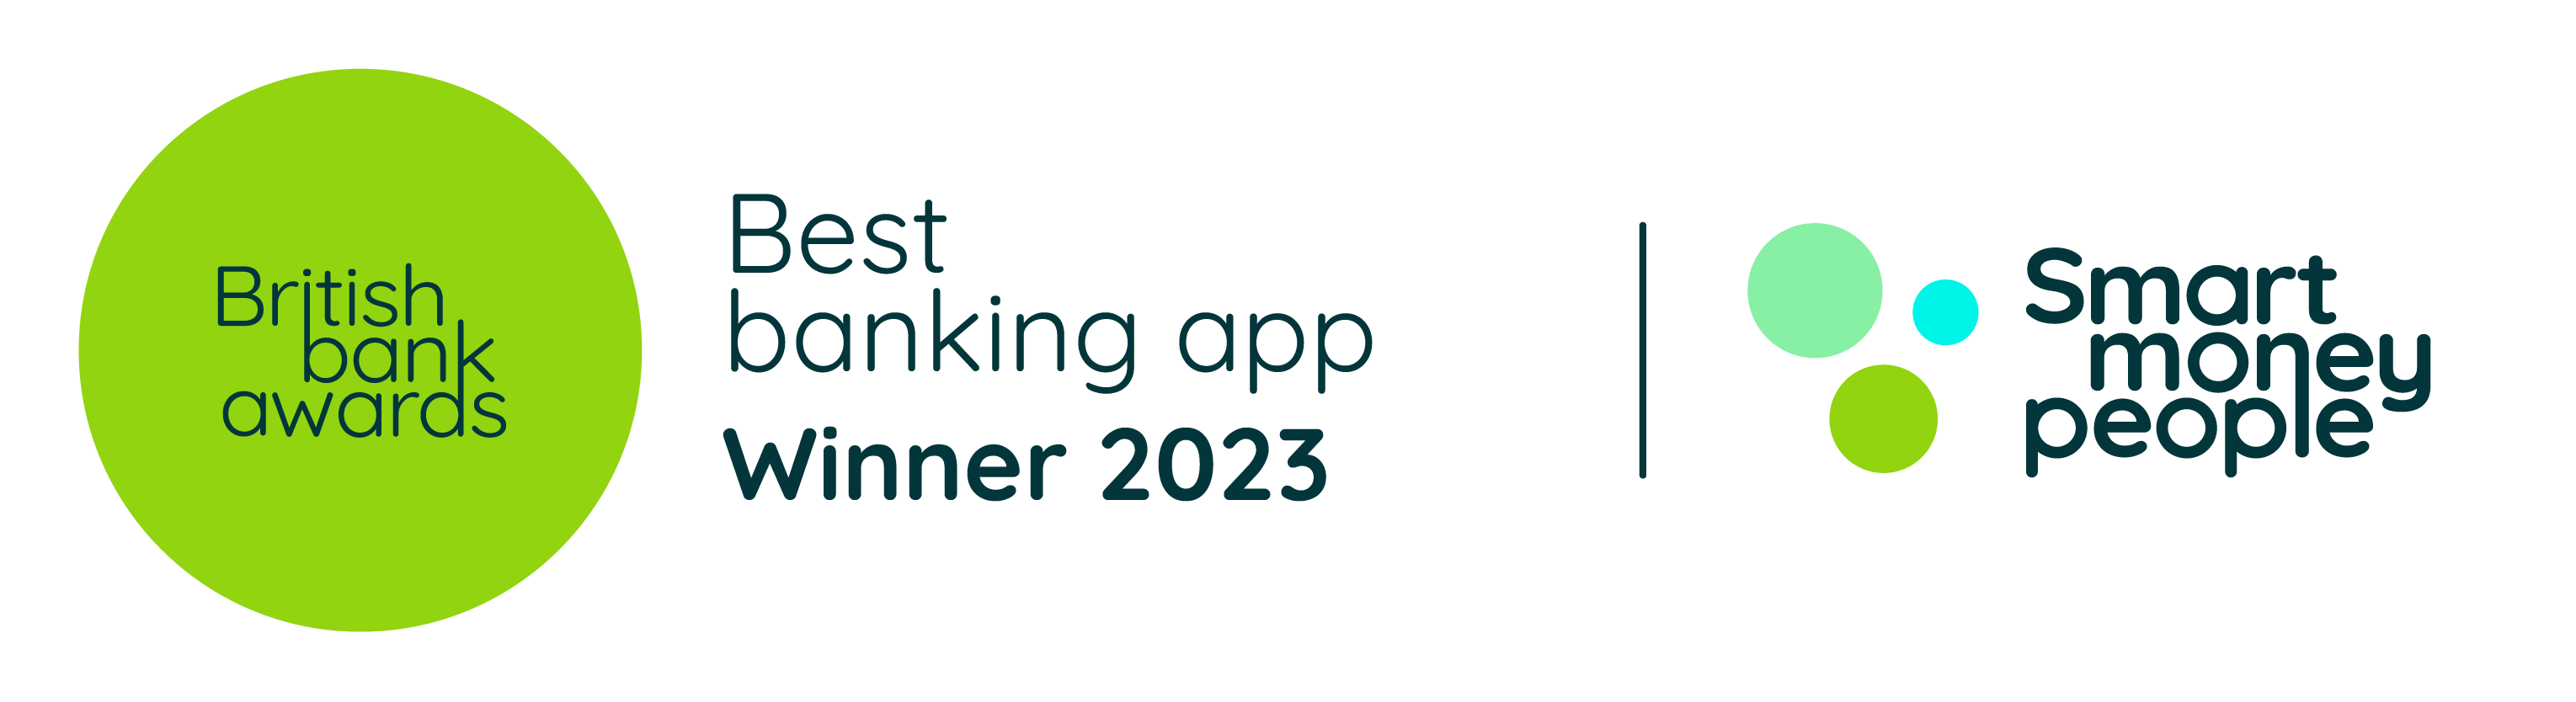 Best Banking App Award 2023